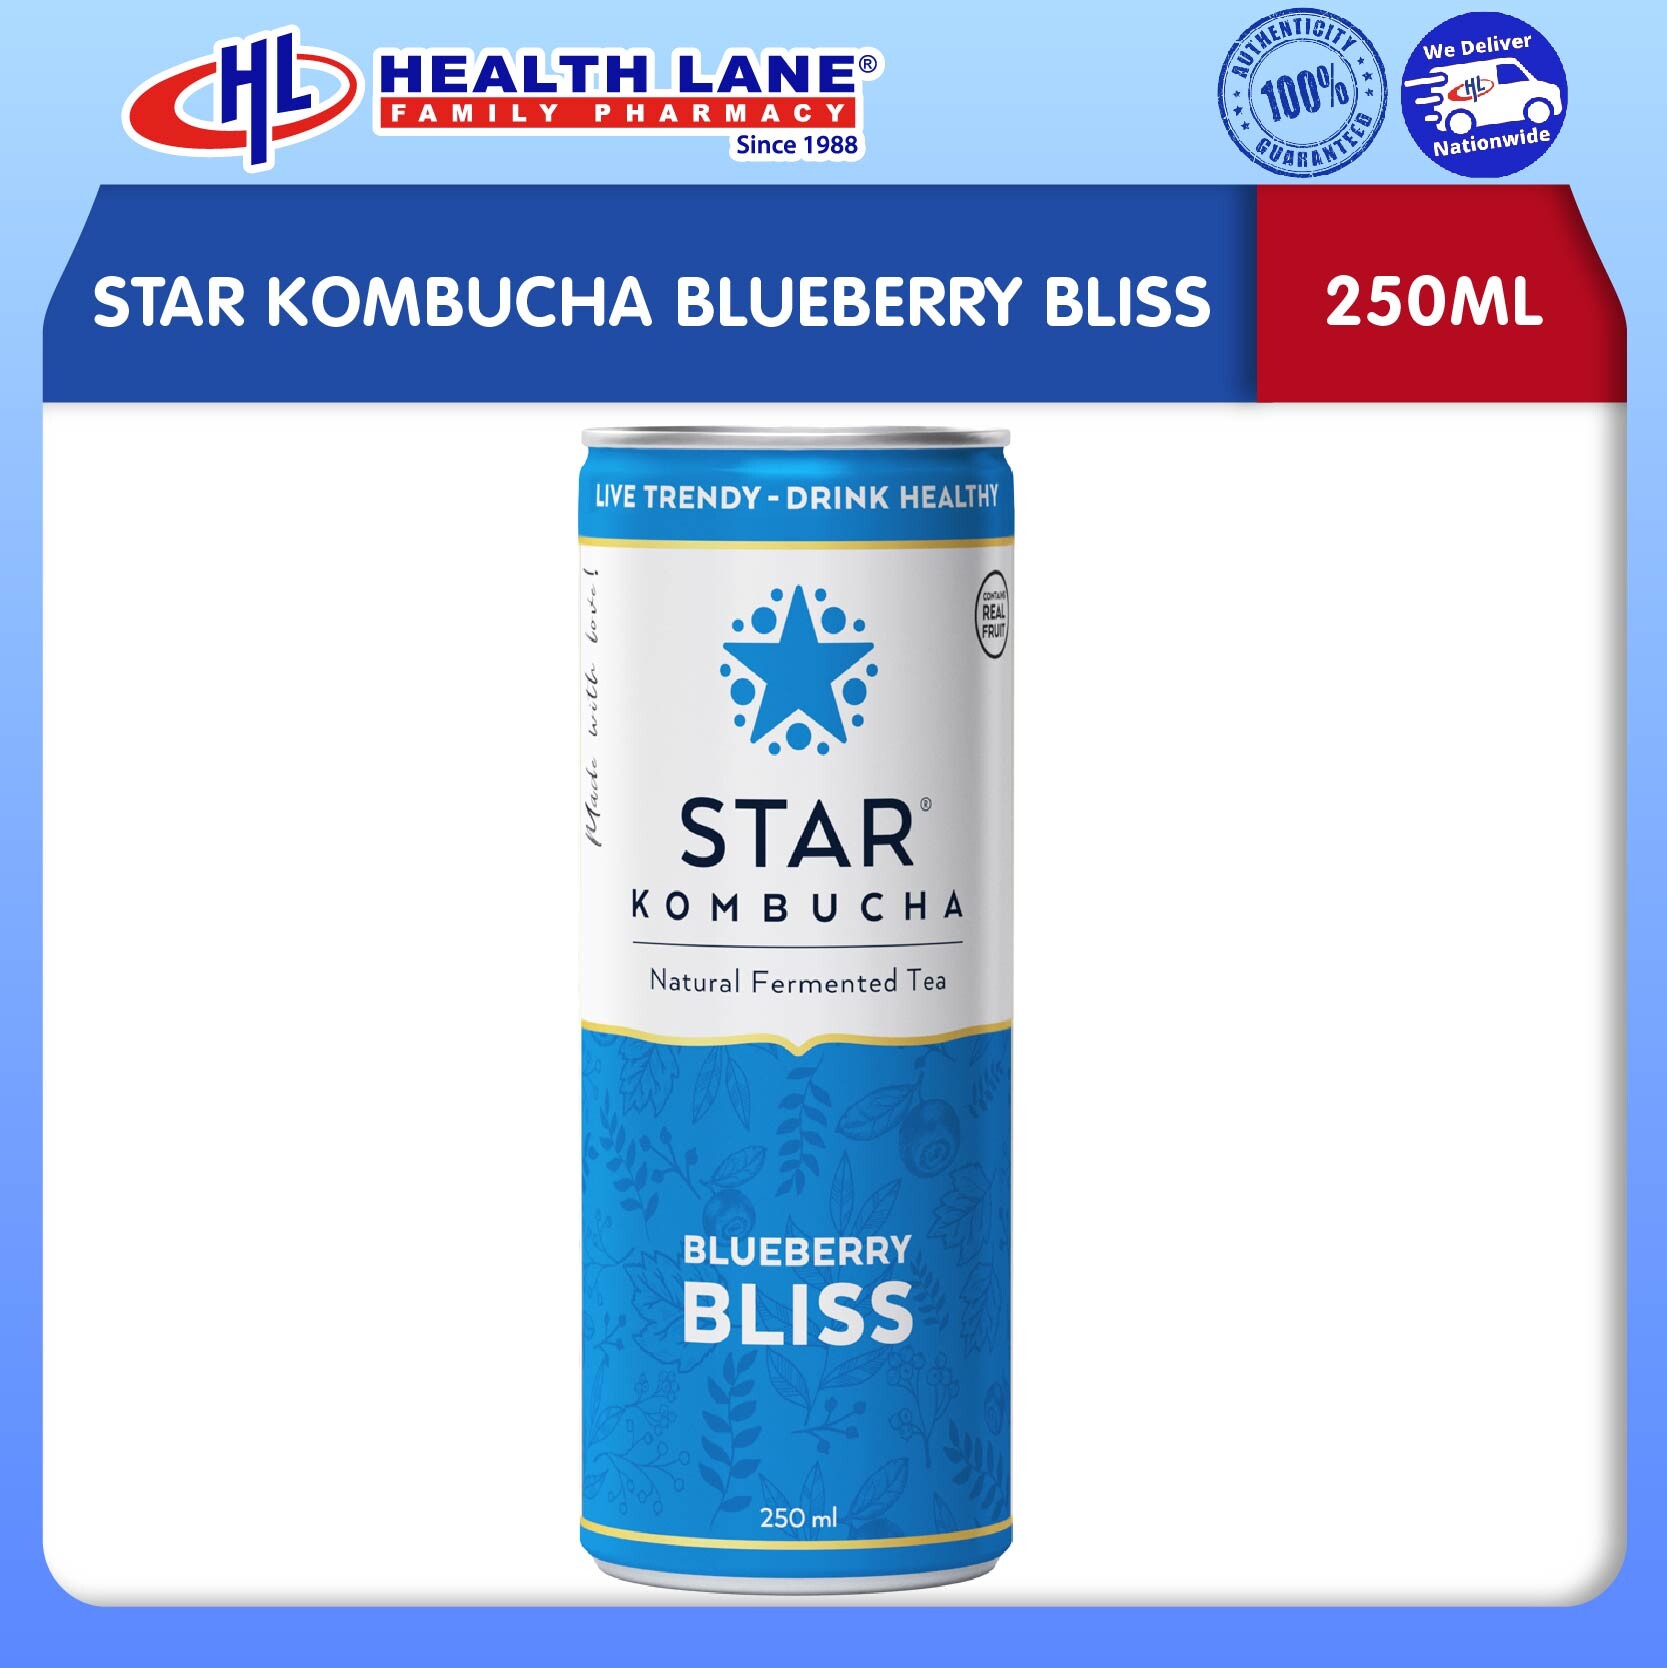 STAR KOMBUCHA BLUEBERRY BLISS (250ML)